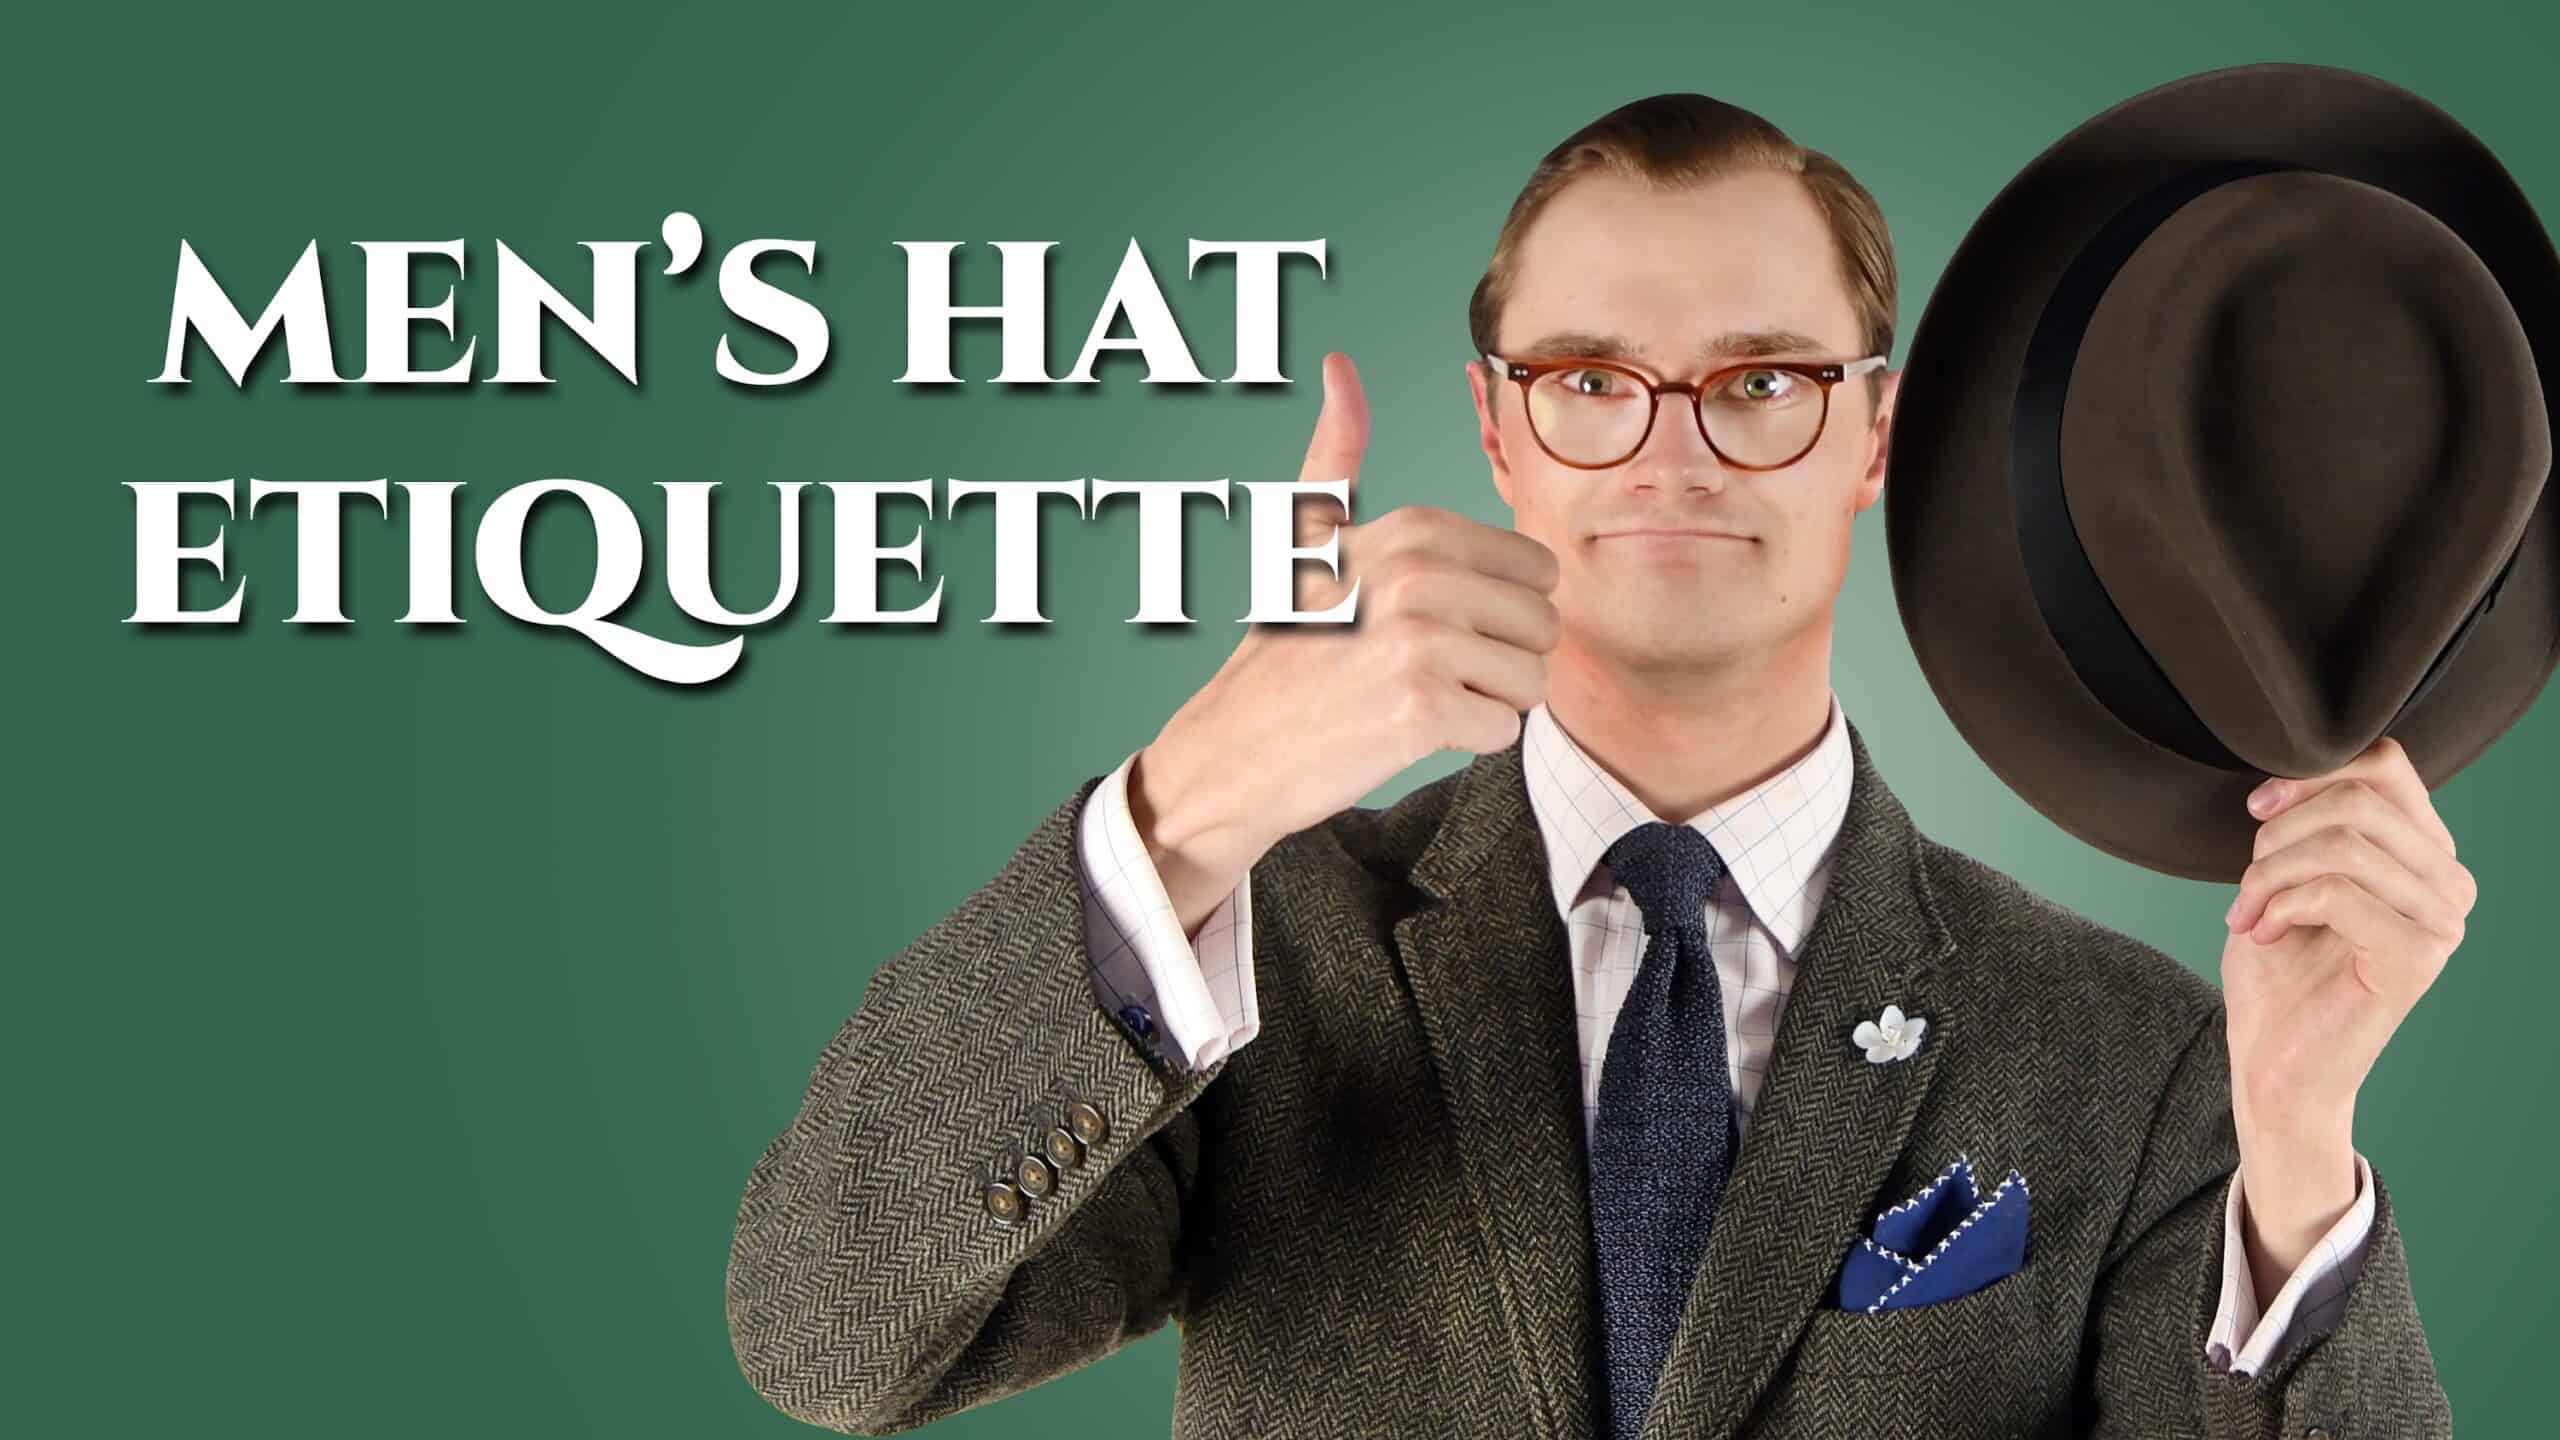 mens hat etiquette guide 3840x2160 scaled